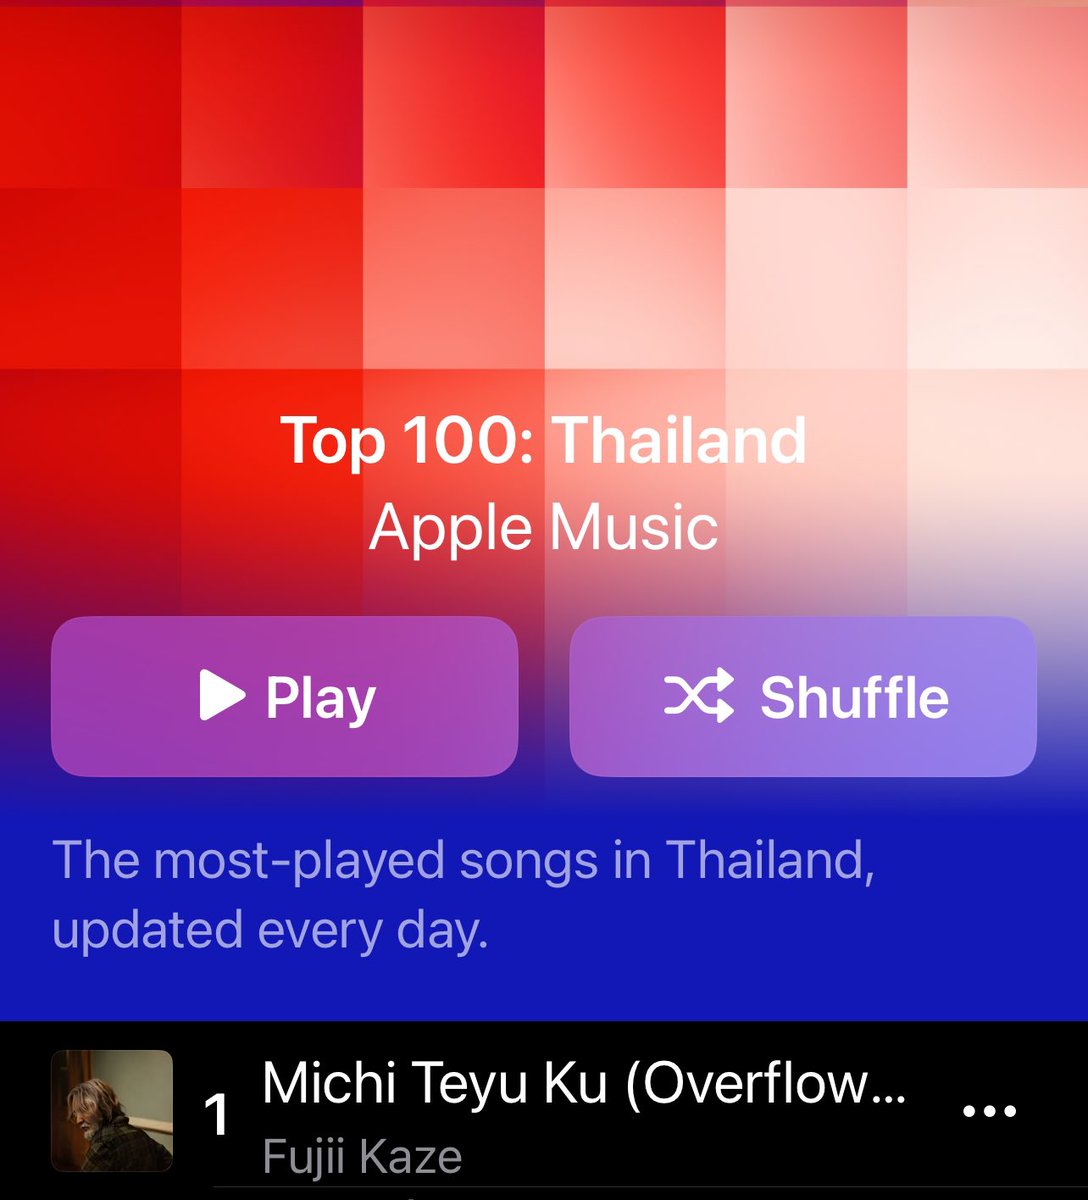 Huge congrats to Fujii Kaze! 'Michi Teyu Ku' is taking over Thailand, hitting #1 on both Spotify Viral 50 🇹🇭 and Apple Music Top 100 🇹🇭 charts!

#FujiiKaze